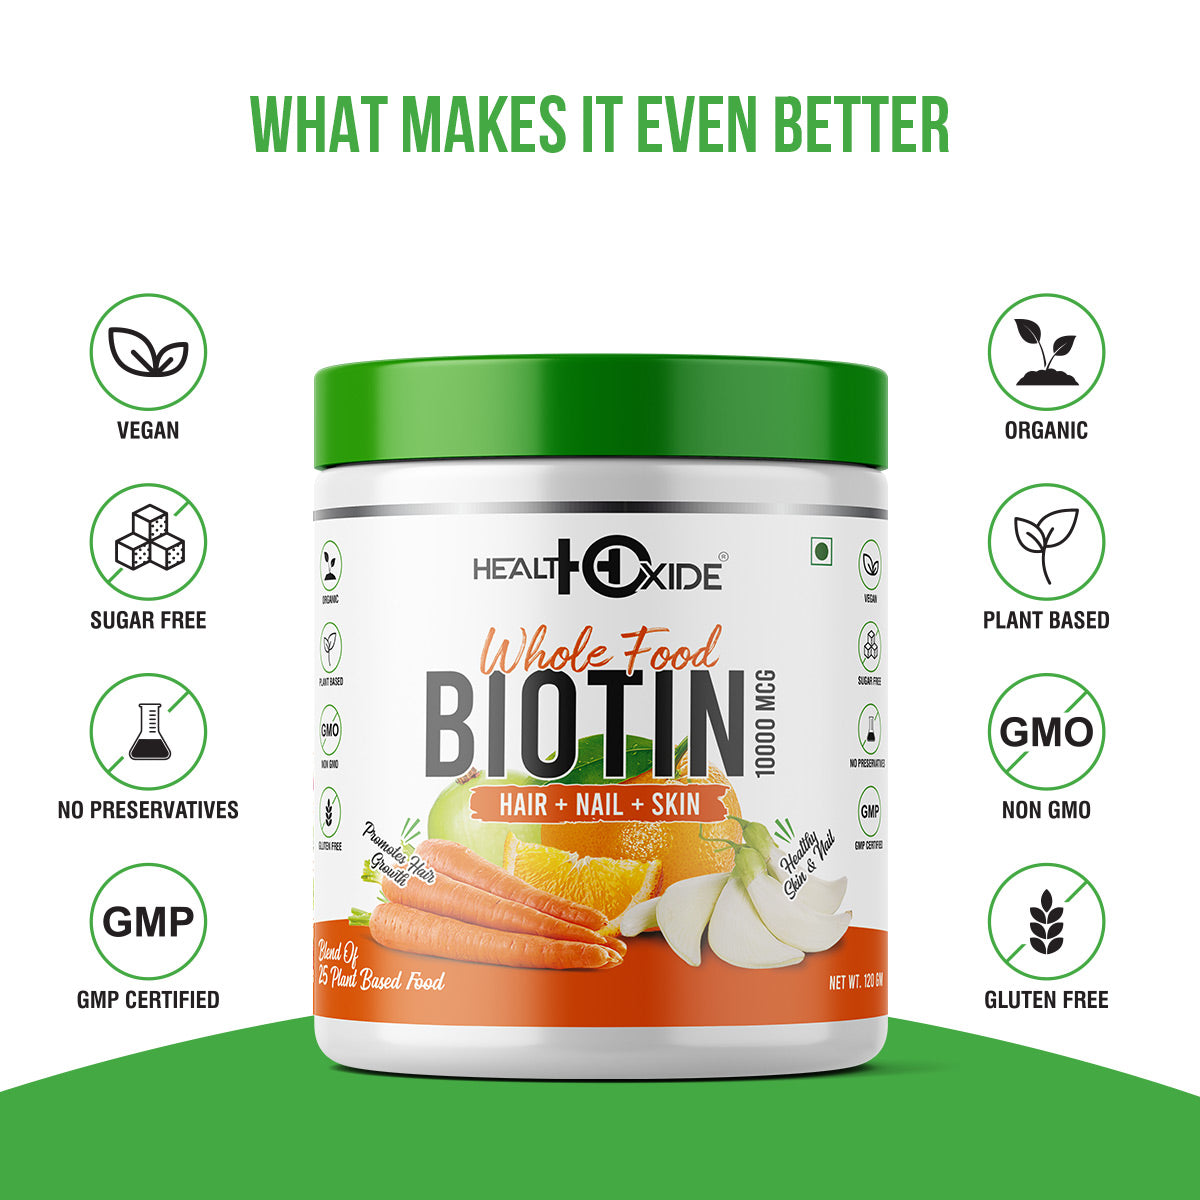 Healthoxide Whole Food Biotin for Healthy Hair, Nail, Skin,120g